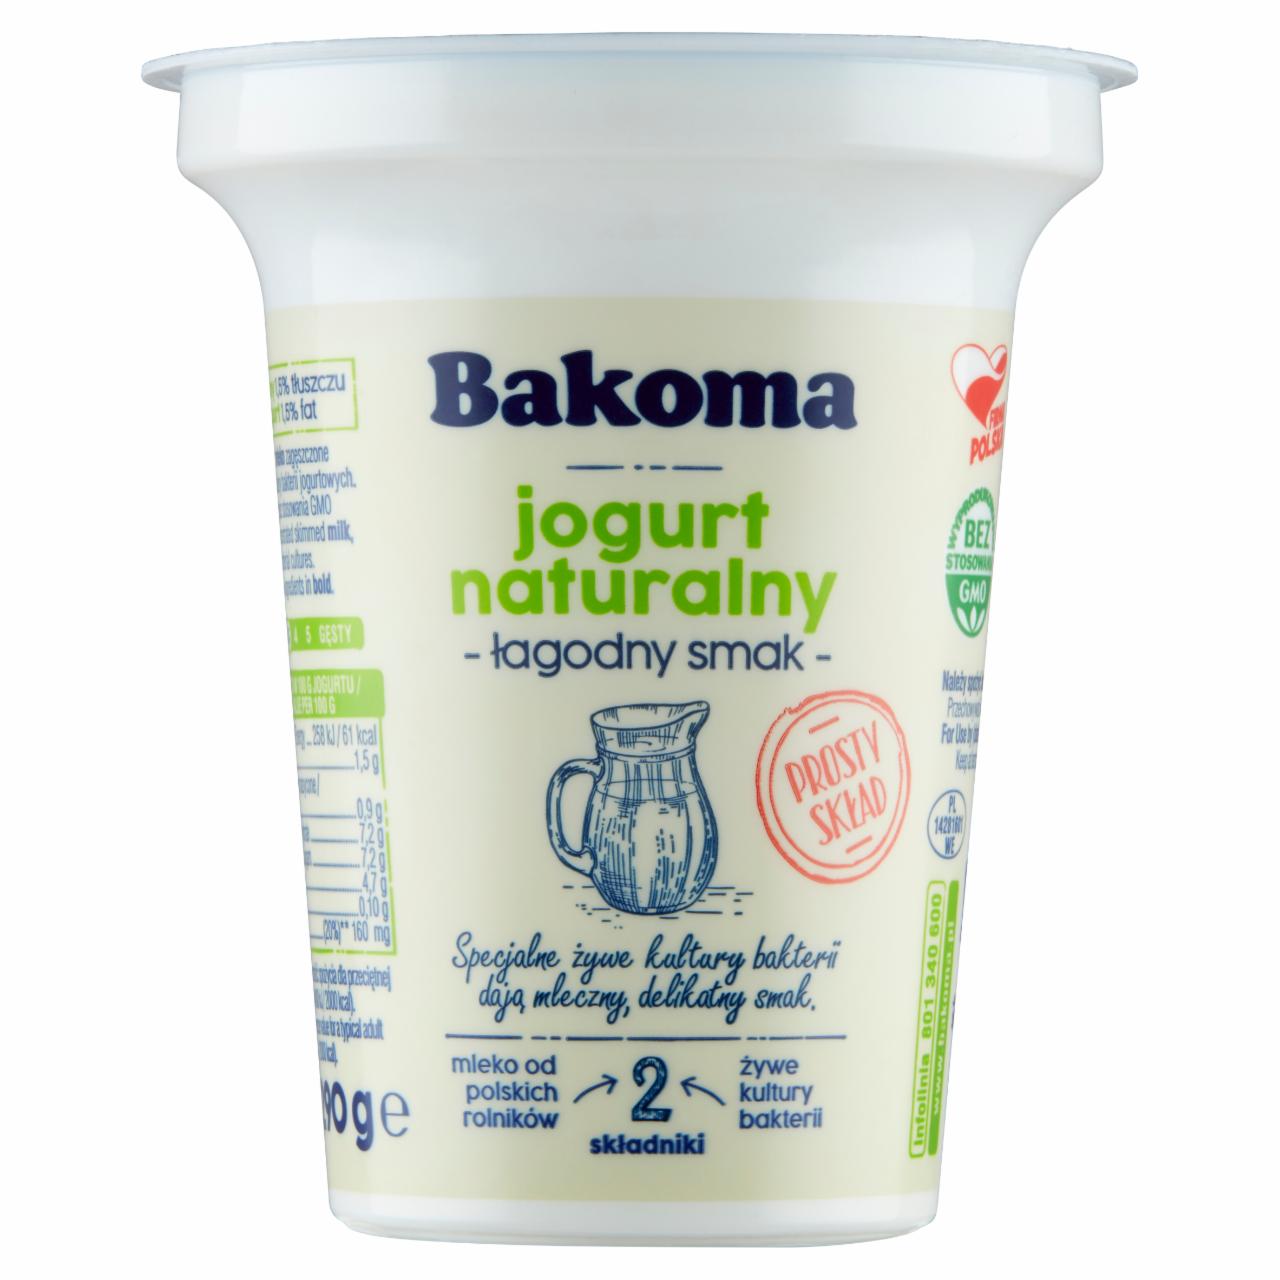 Zdjęcia - Bakoma Jogurt naturalny łagodny smak 290 g